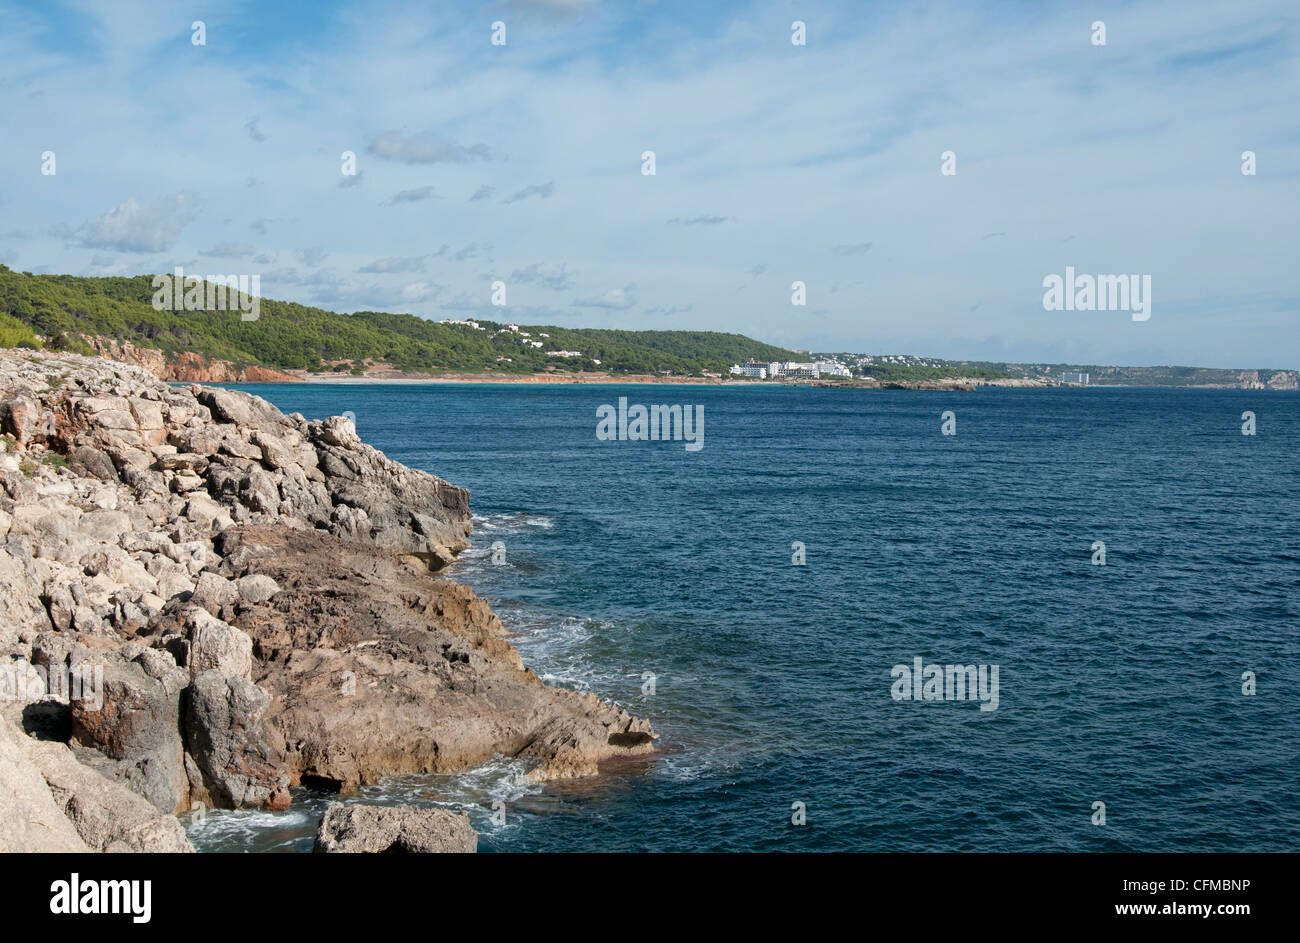 Looking along the Menorcan coastline towards the beach resort of Sant Tomas on the island of Menorca Spain Stock Photo